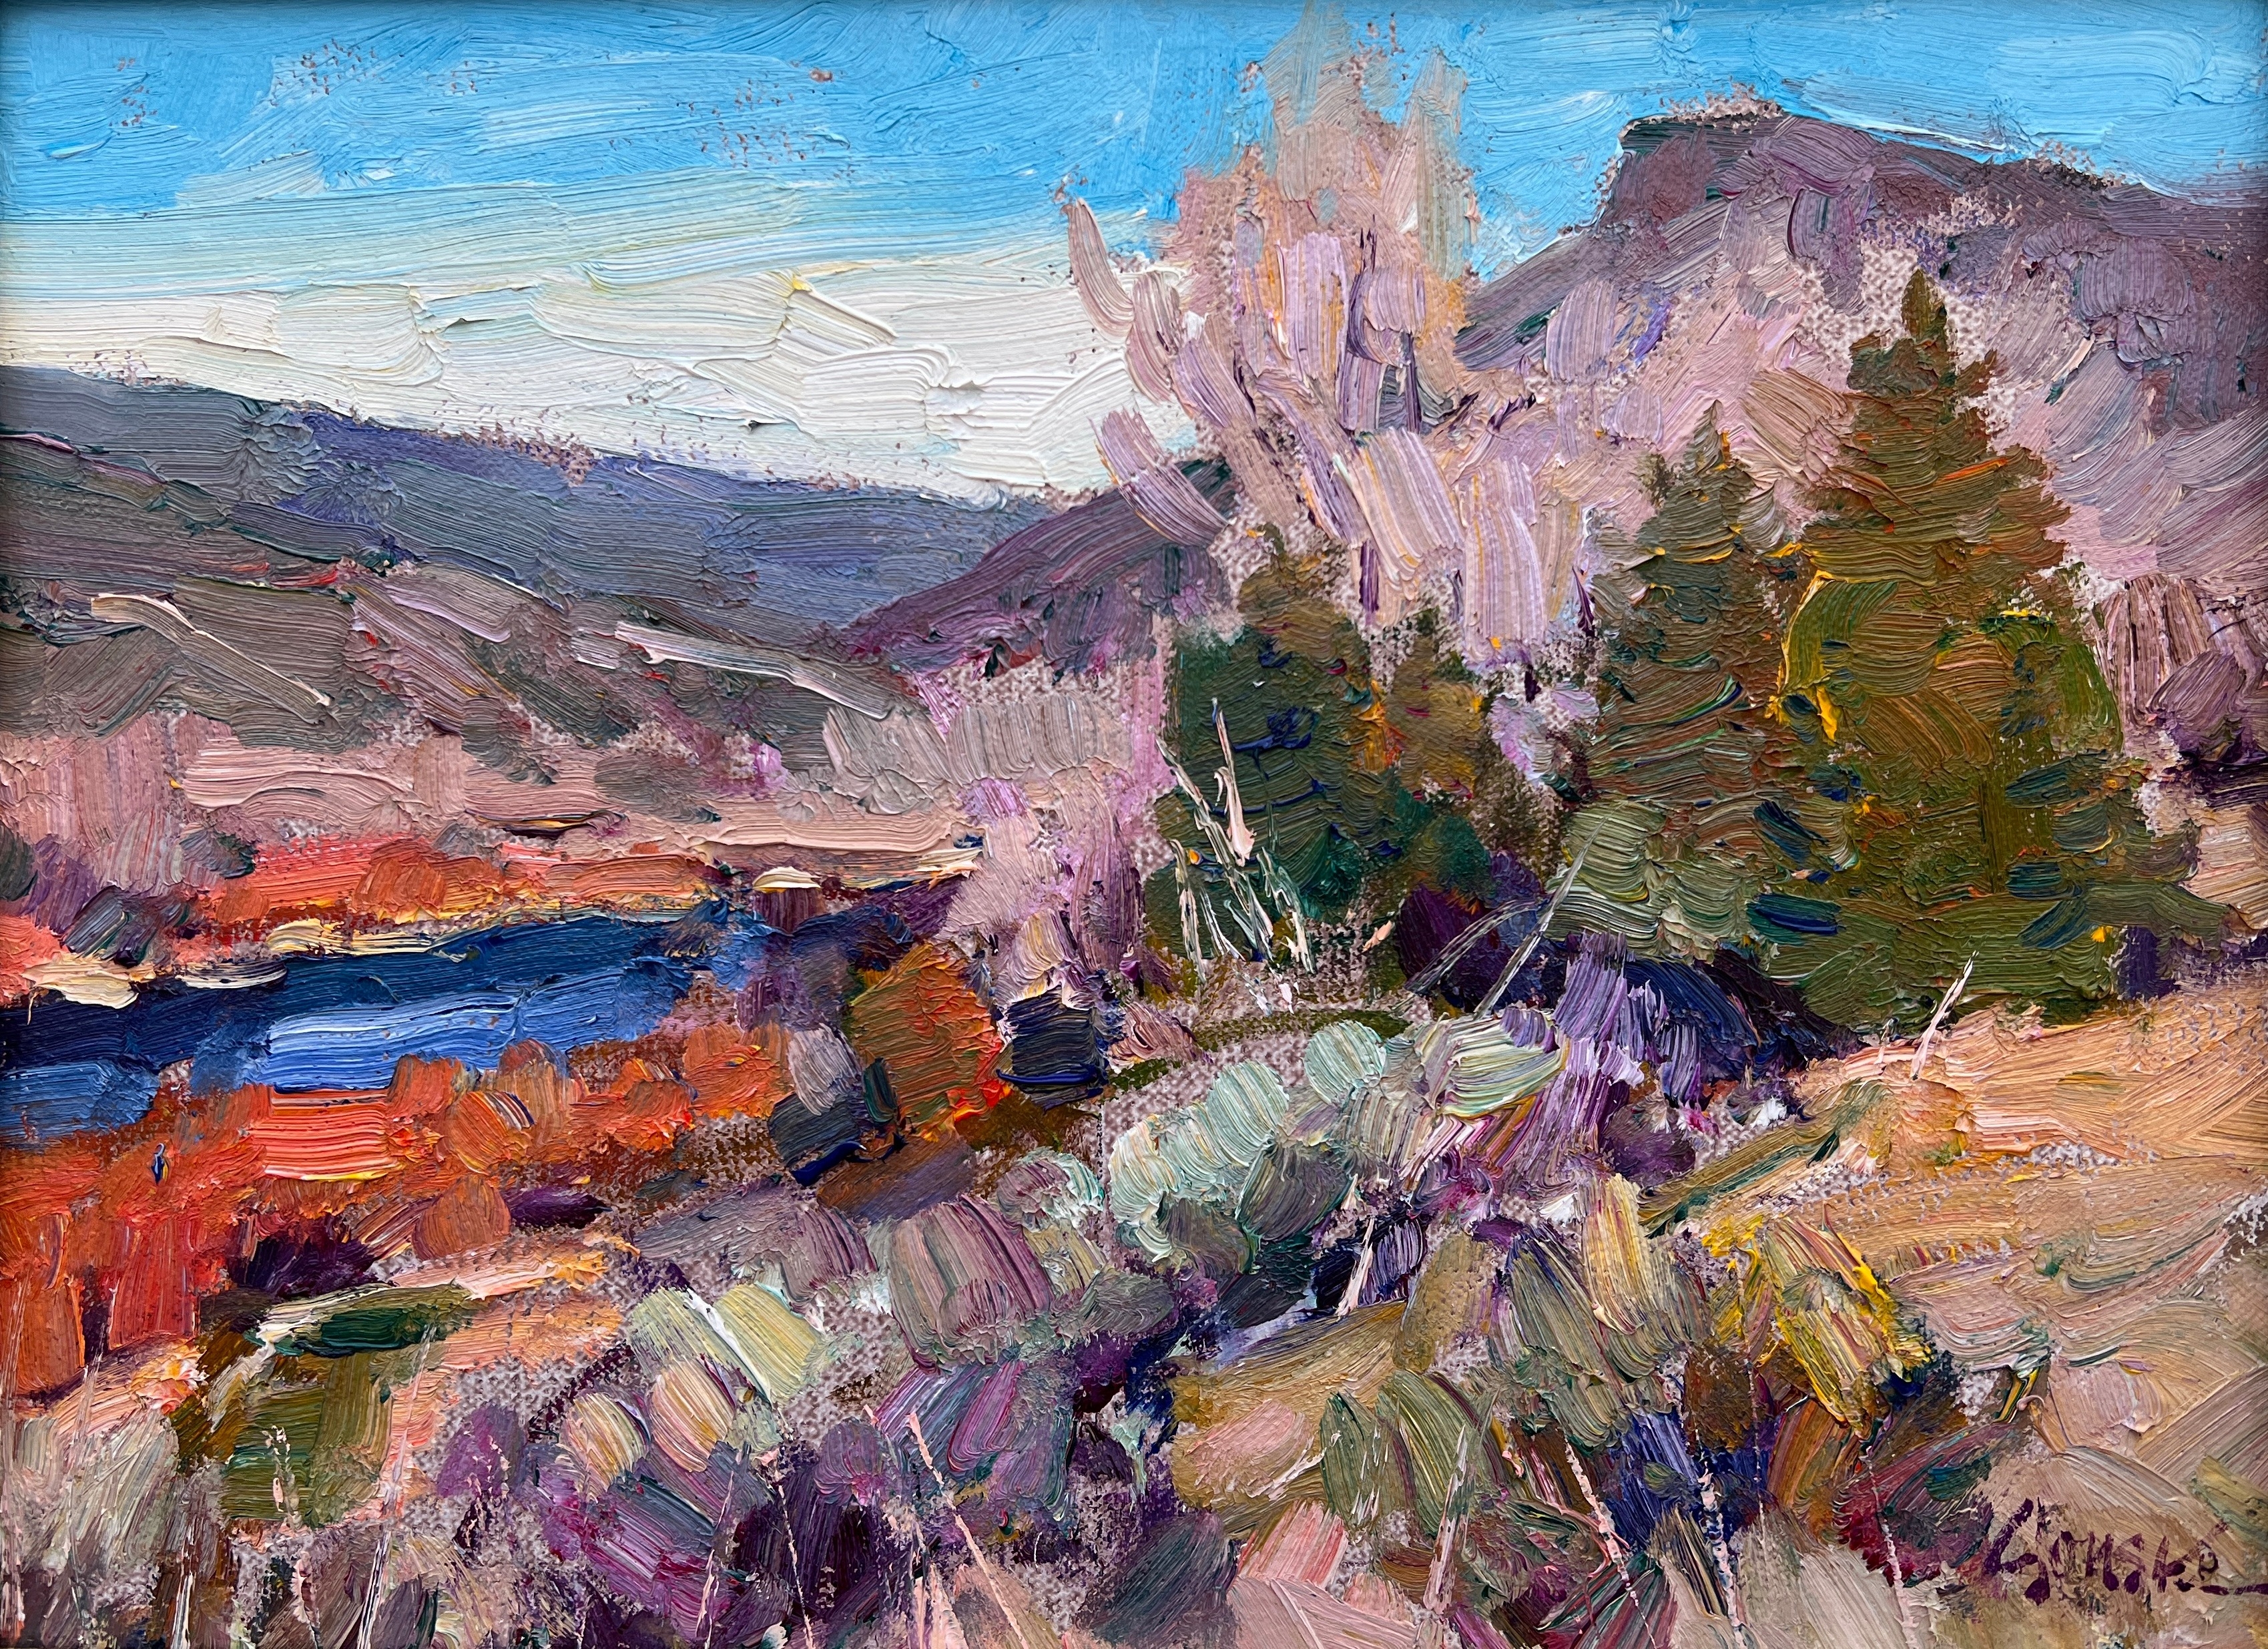 
The Rio Grande at Pilar by Walt Gonske